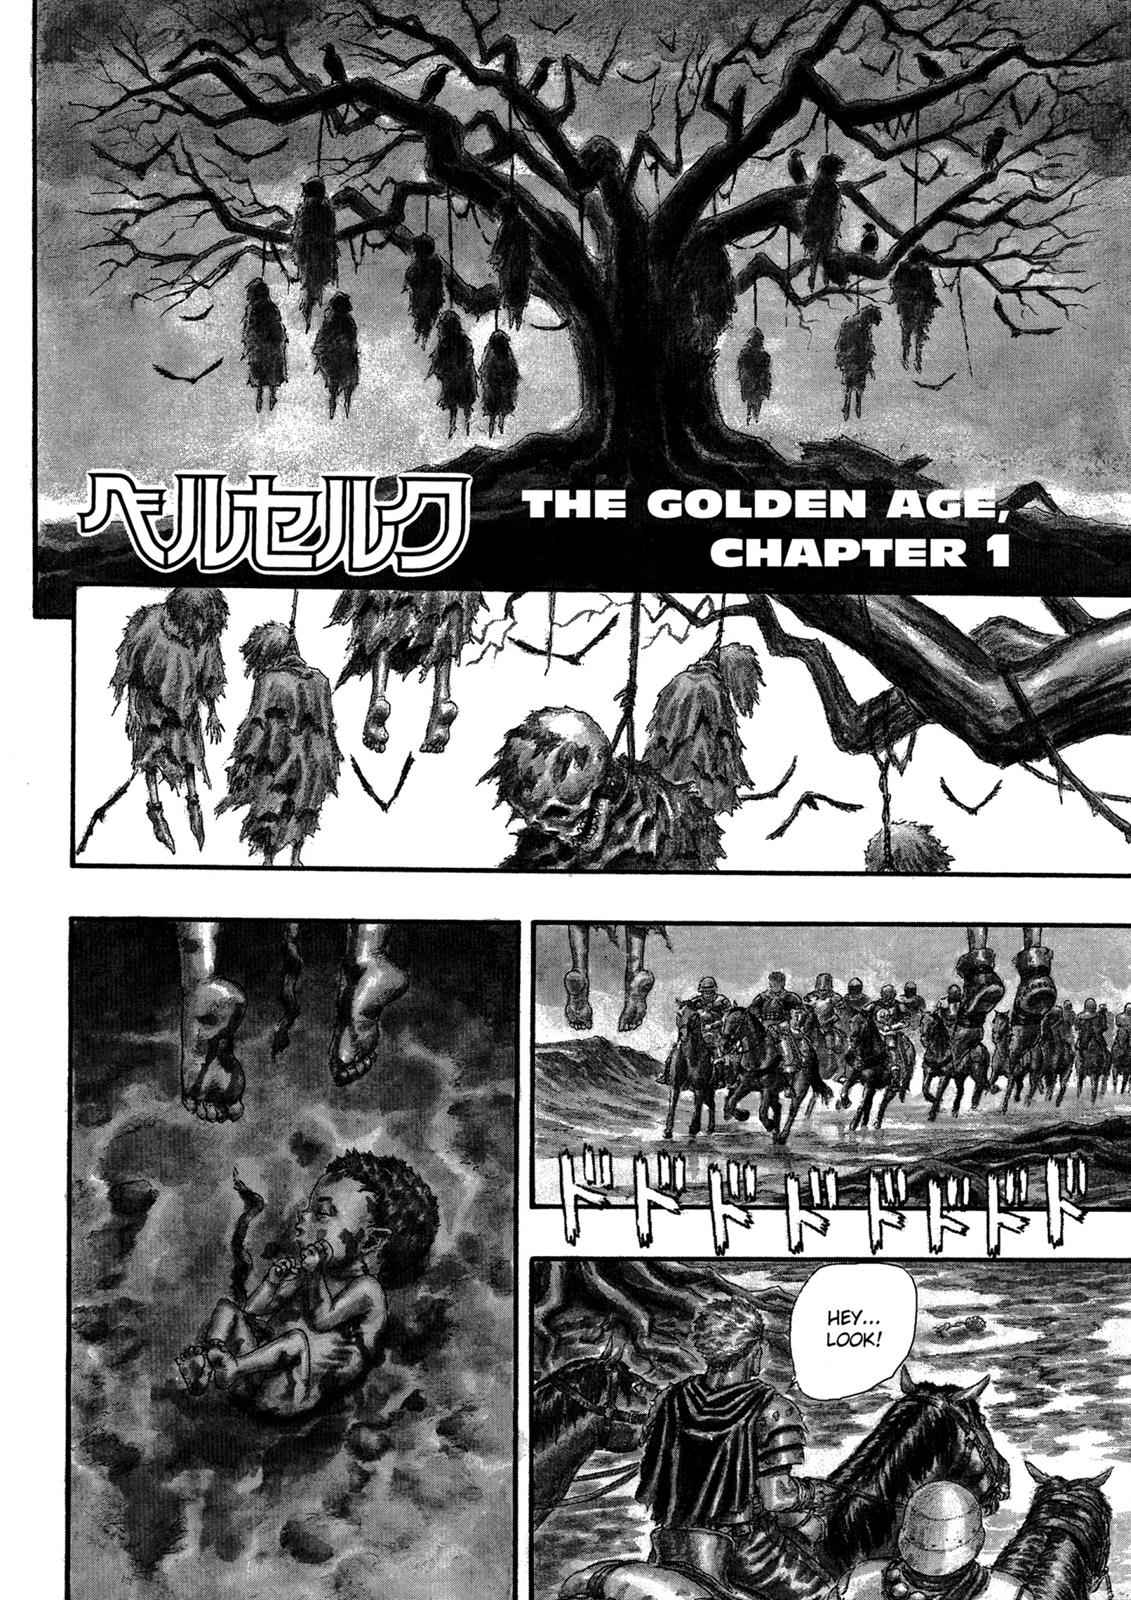 The Golden Age Chapter 1 Berserk Chapter I0 | Read Berserk Manga Online